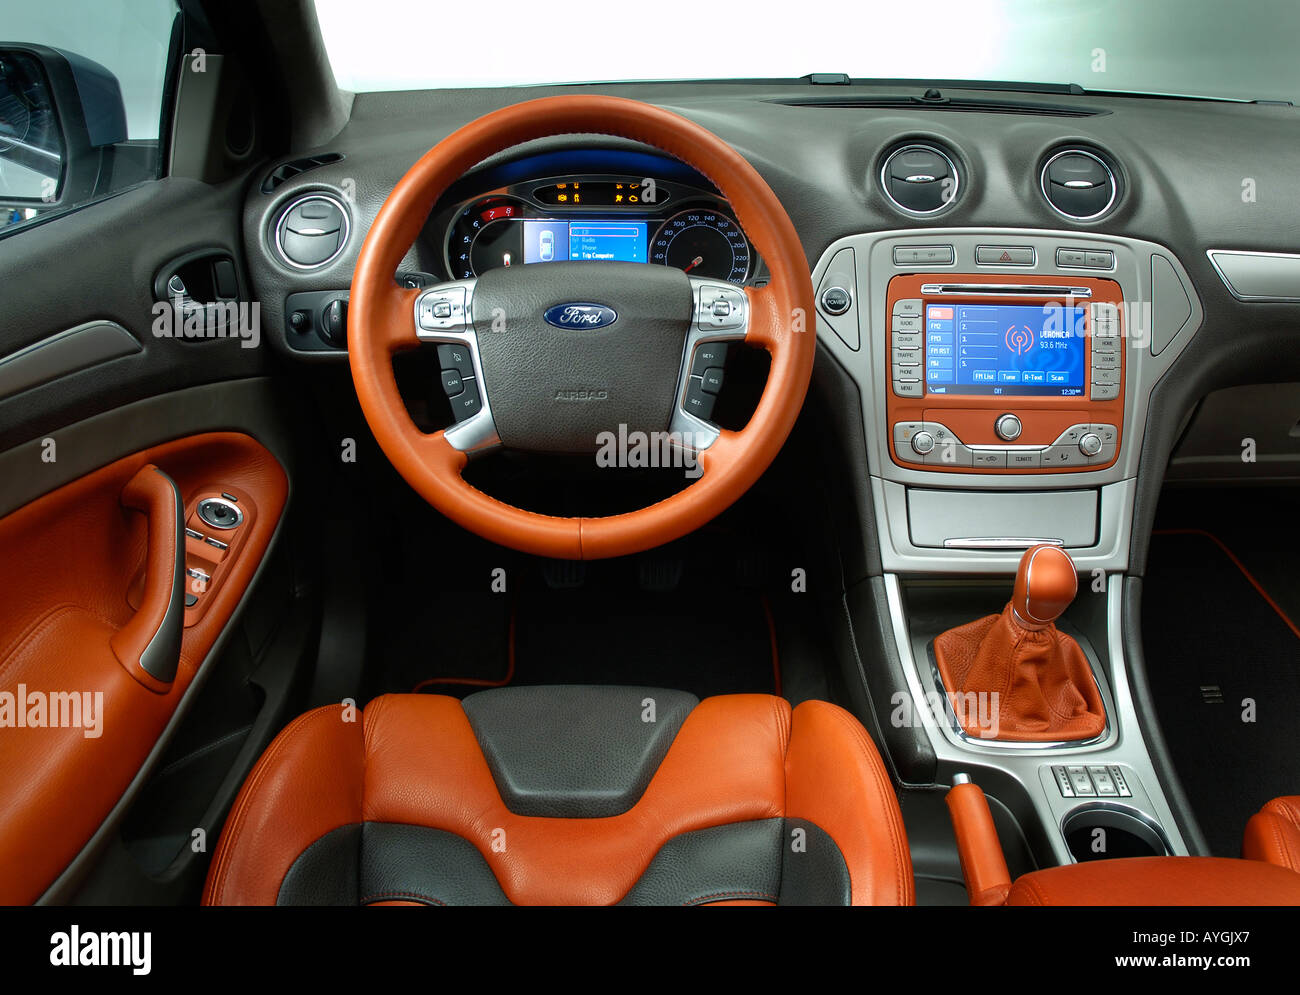 Ford Mondeo Concept Interior 2006 Stock Photo 9773606 Alamy